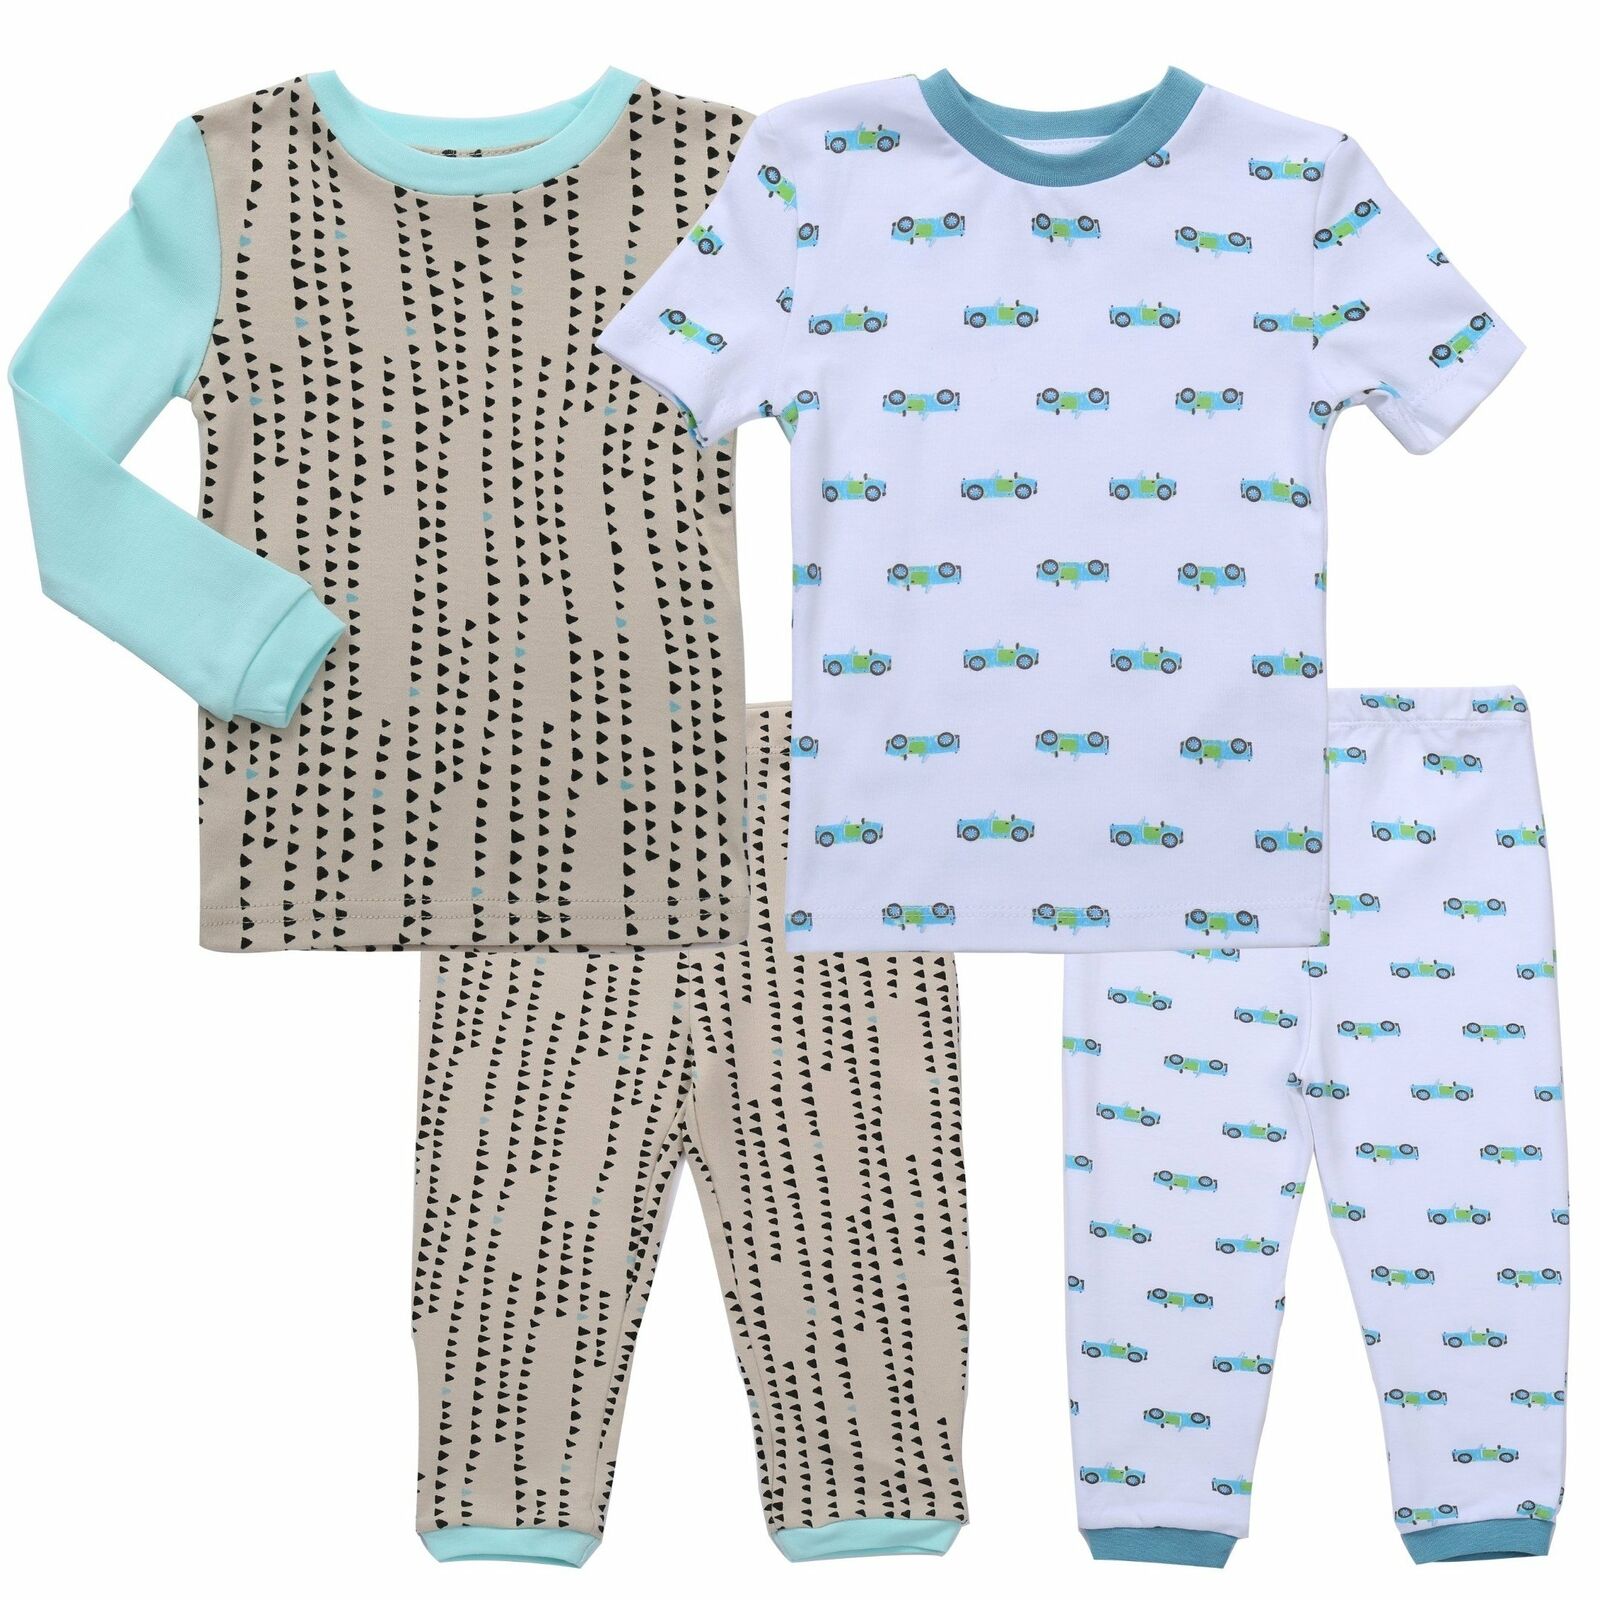 Asher & Olivia Boys Pajamas 4 Pc Cotton Pjs Set for Baby Toddler Little Kids